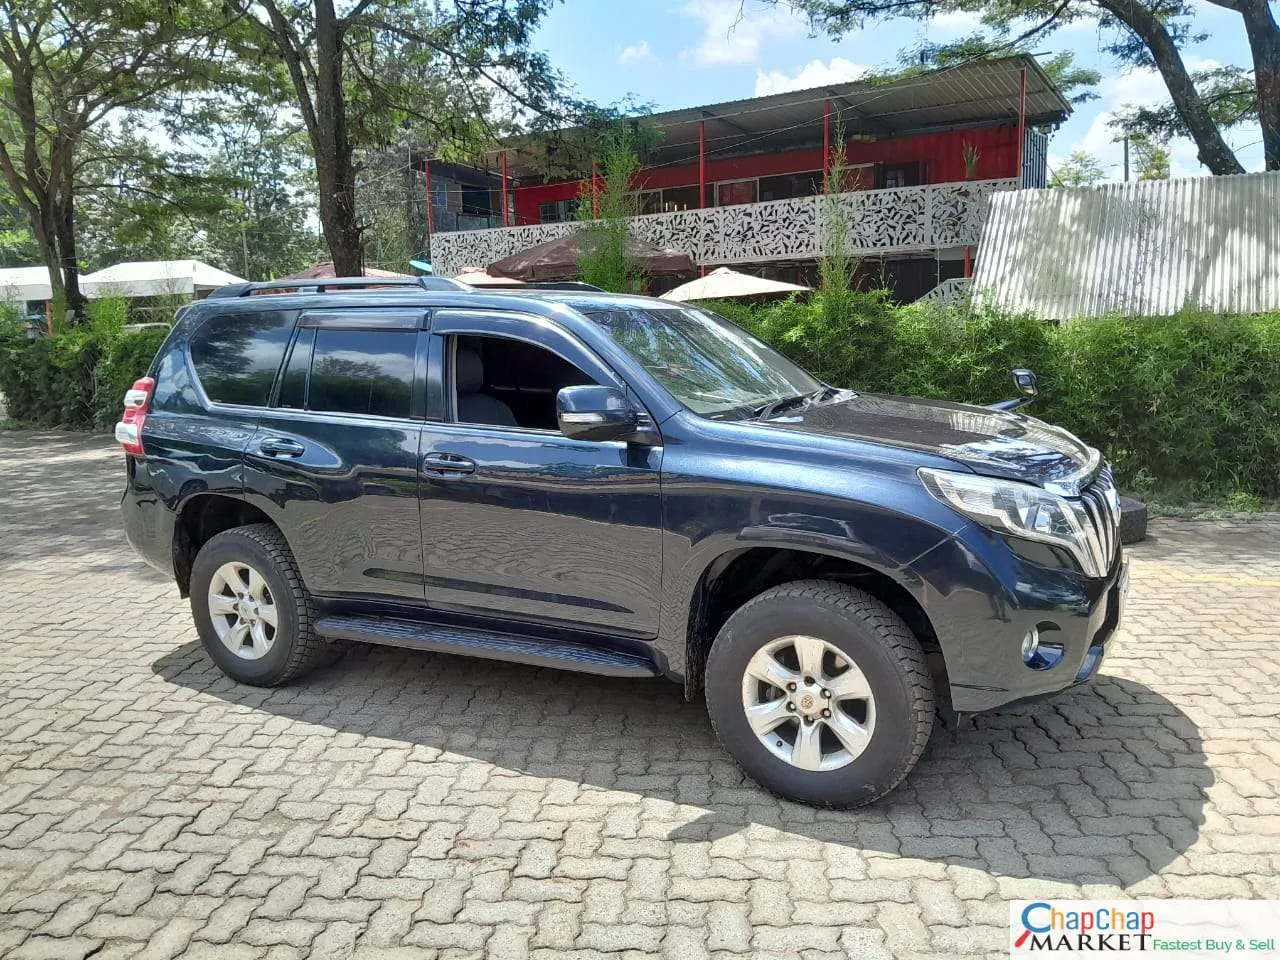 Toyota Prado j150 Kenya 🔥 🔥 You Pay 30% Deposit Trade in OK Prado for sale in kenya hire purchase installments